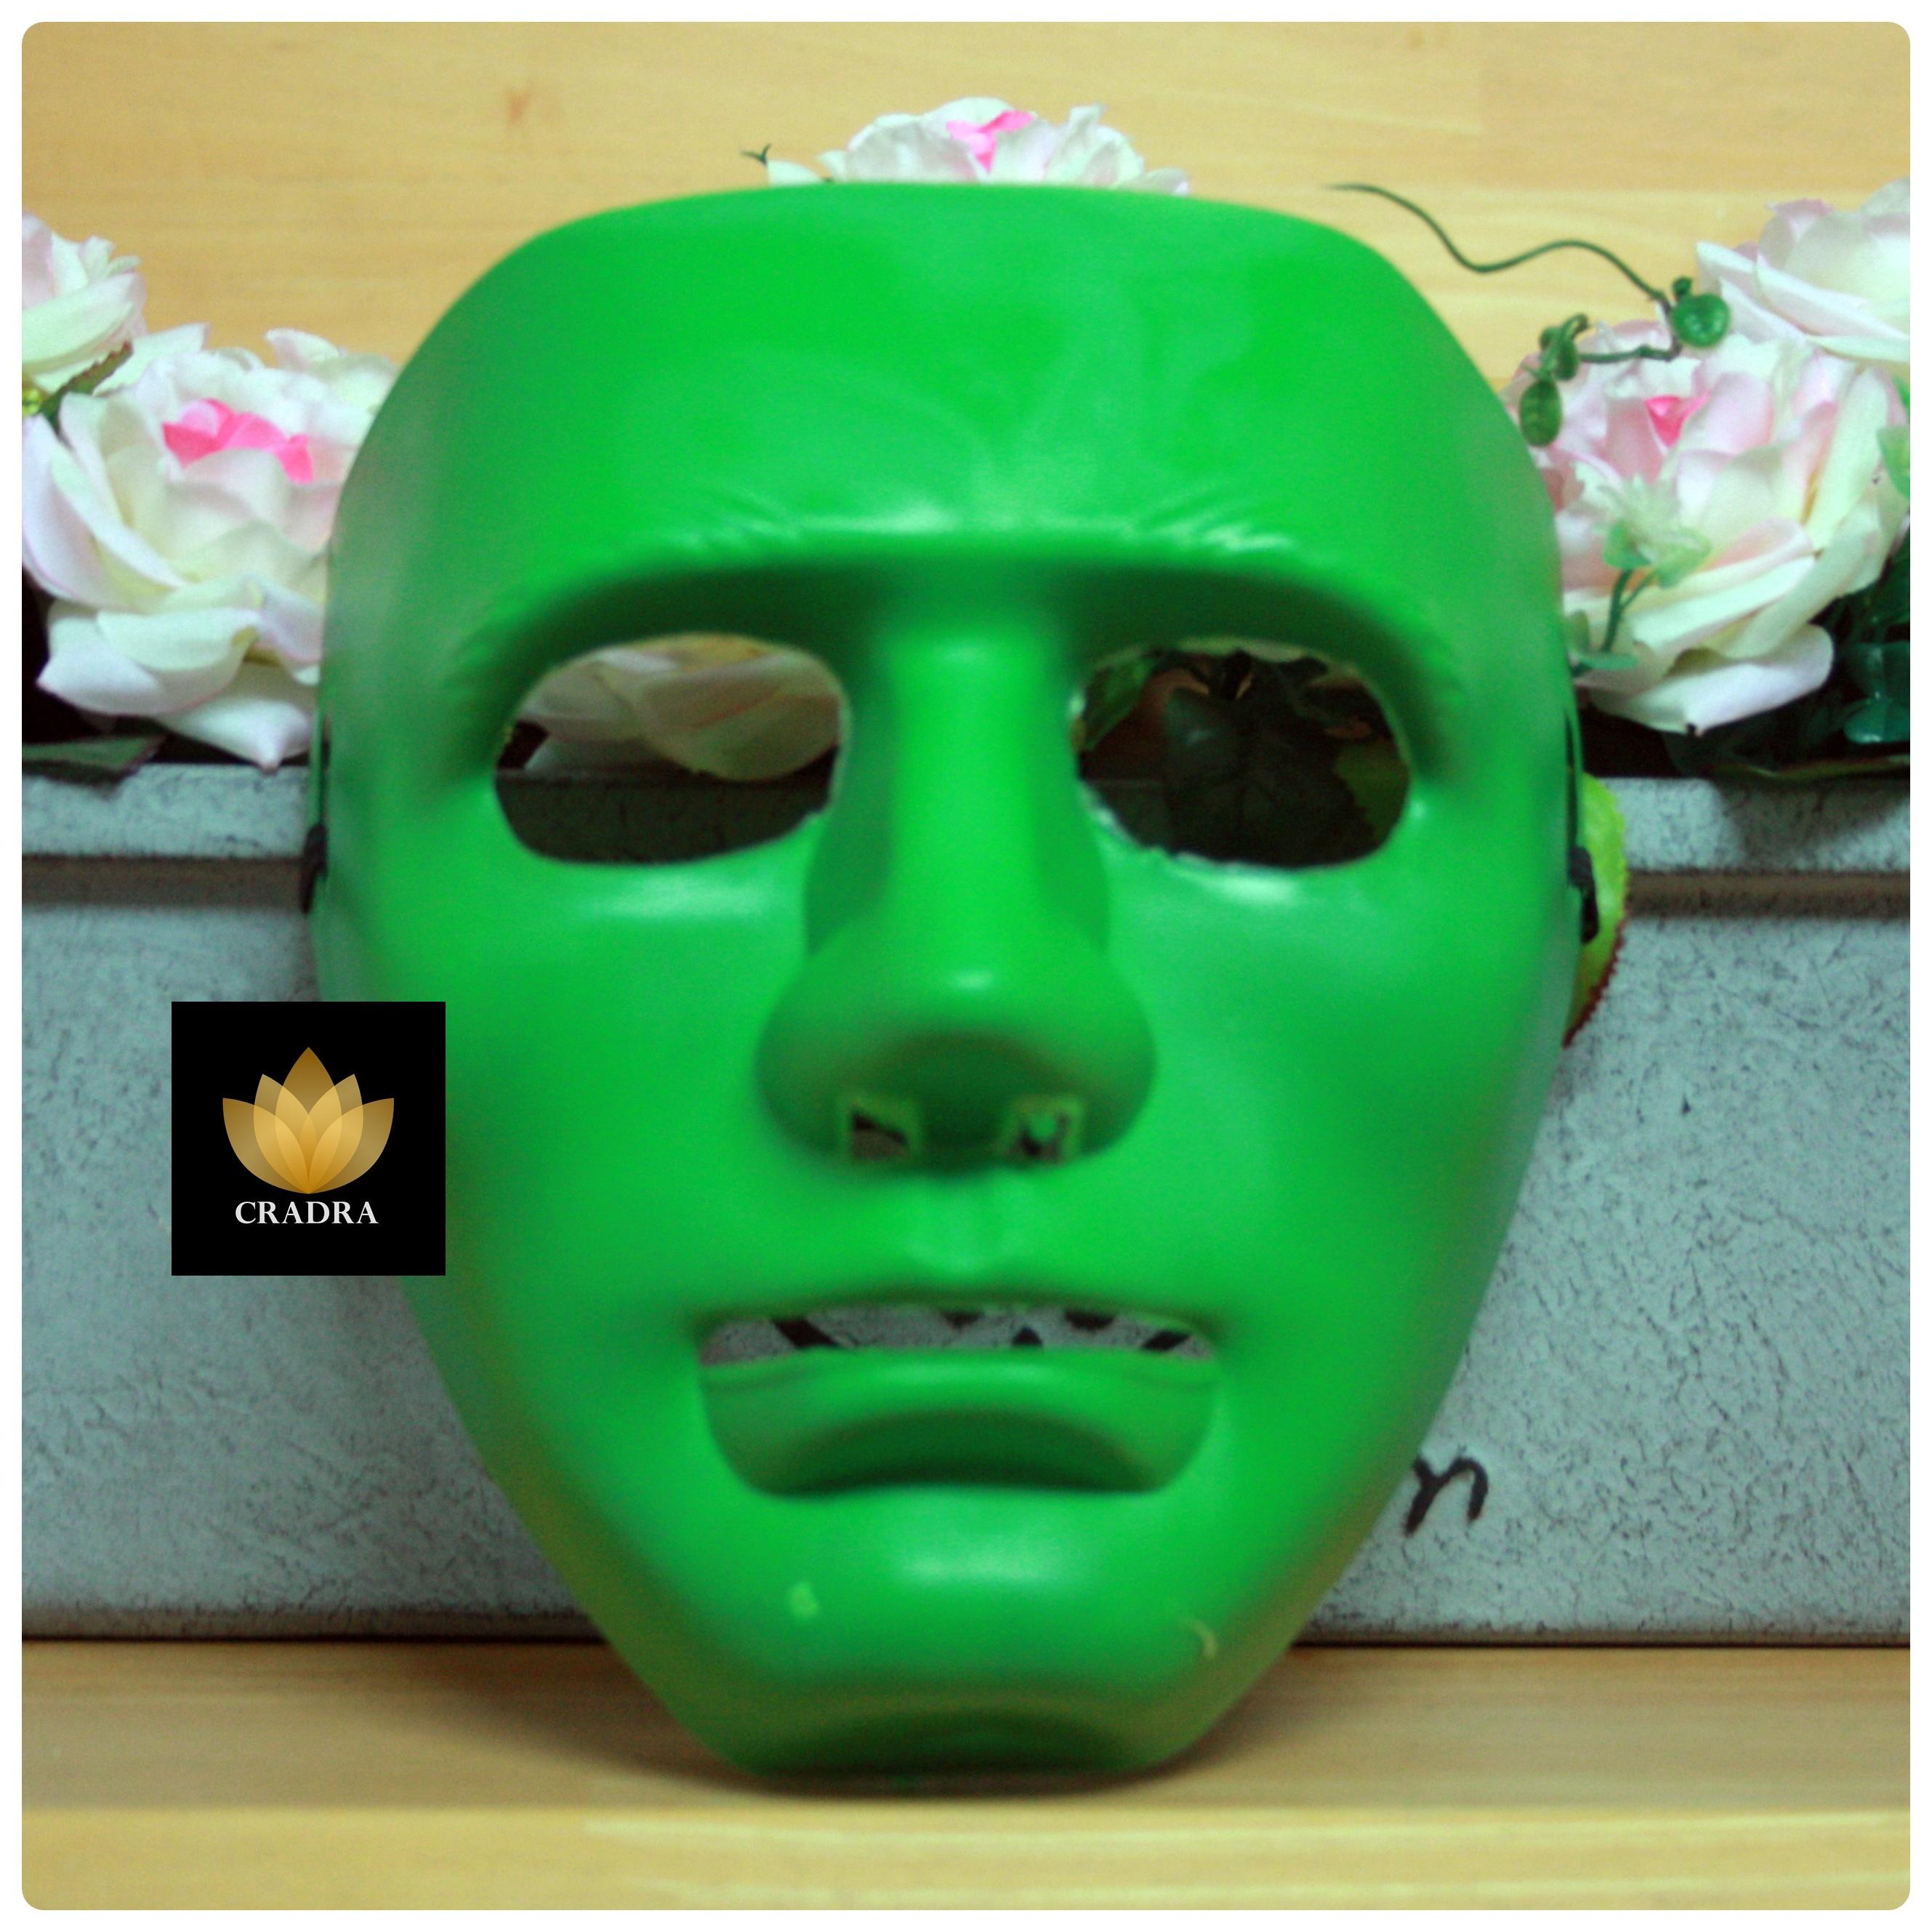 Songkran Mask หน้ากากกันร้อน หน้ากากสงกรานต์ แฟนซี หน้ากากพลาสติกแบบเต็มใบ สำหรับงานปาร์ตี้เต้นรำ ปาร์ตี้ งานฮาโลวีน